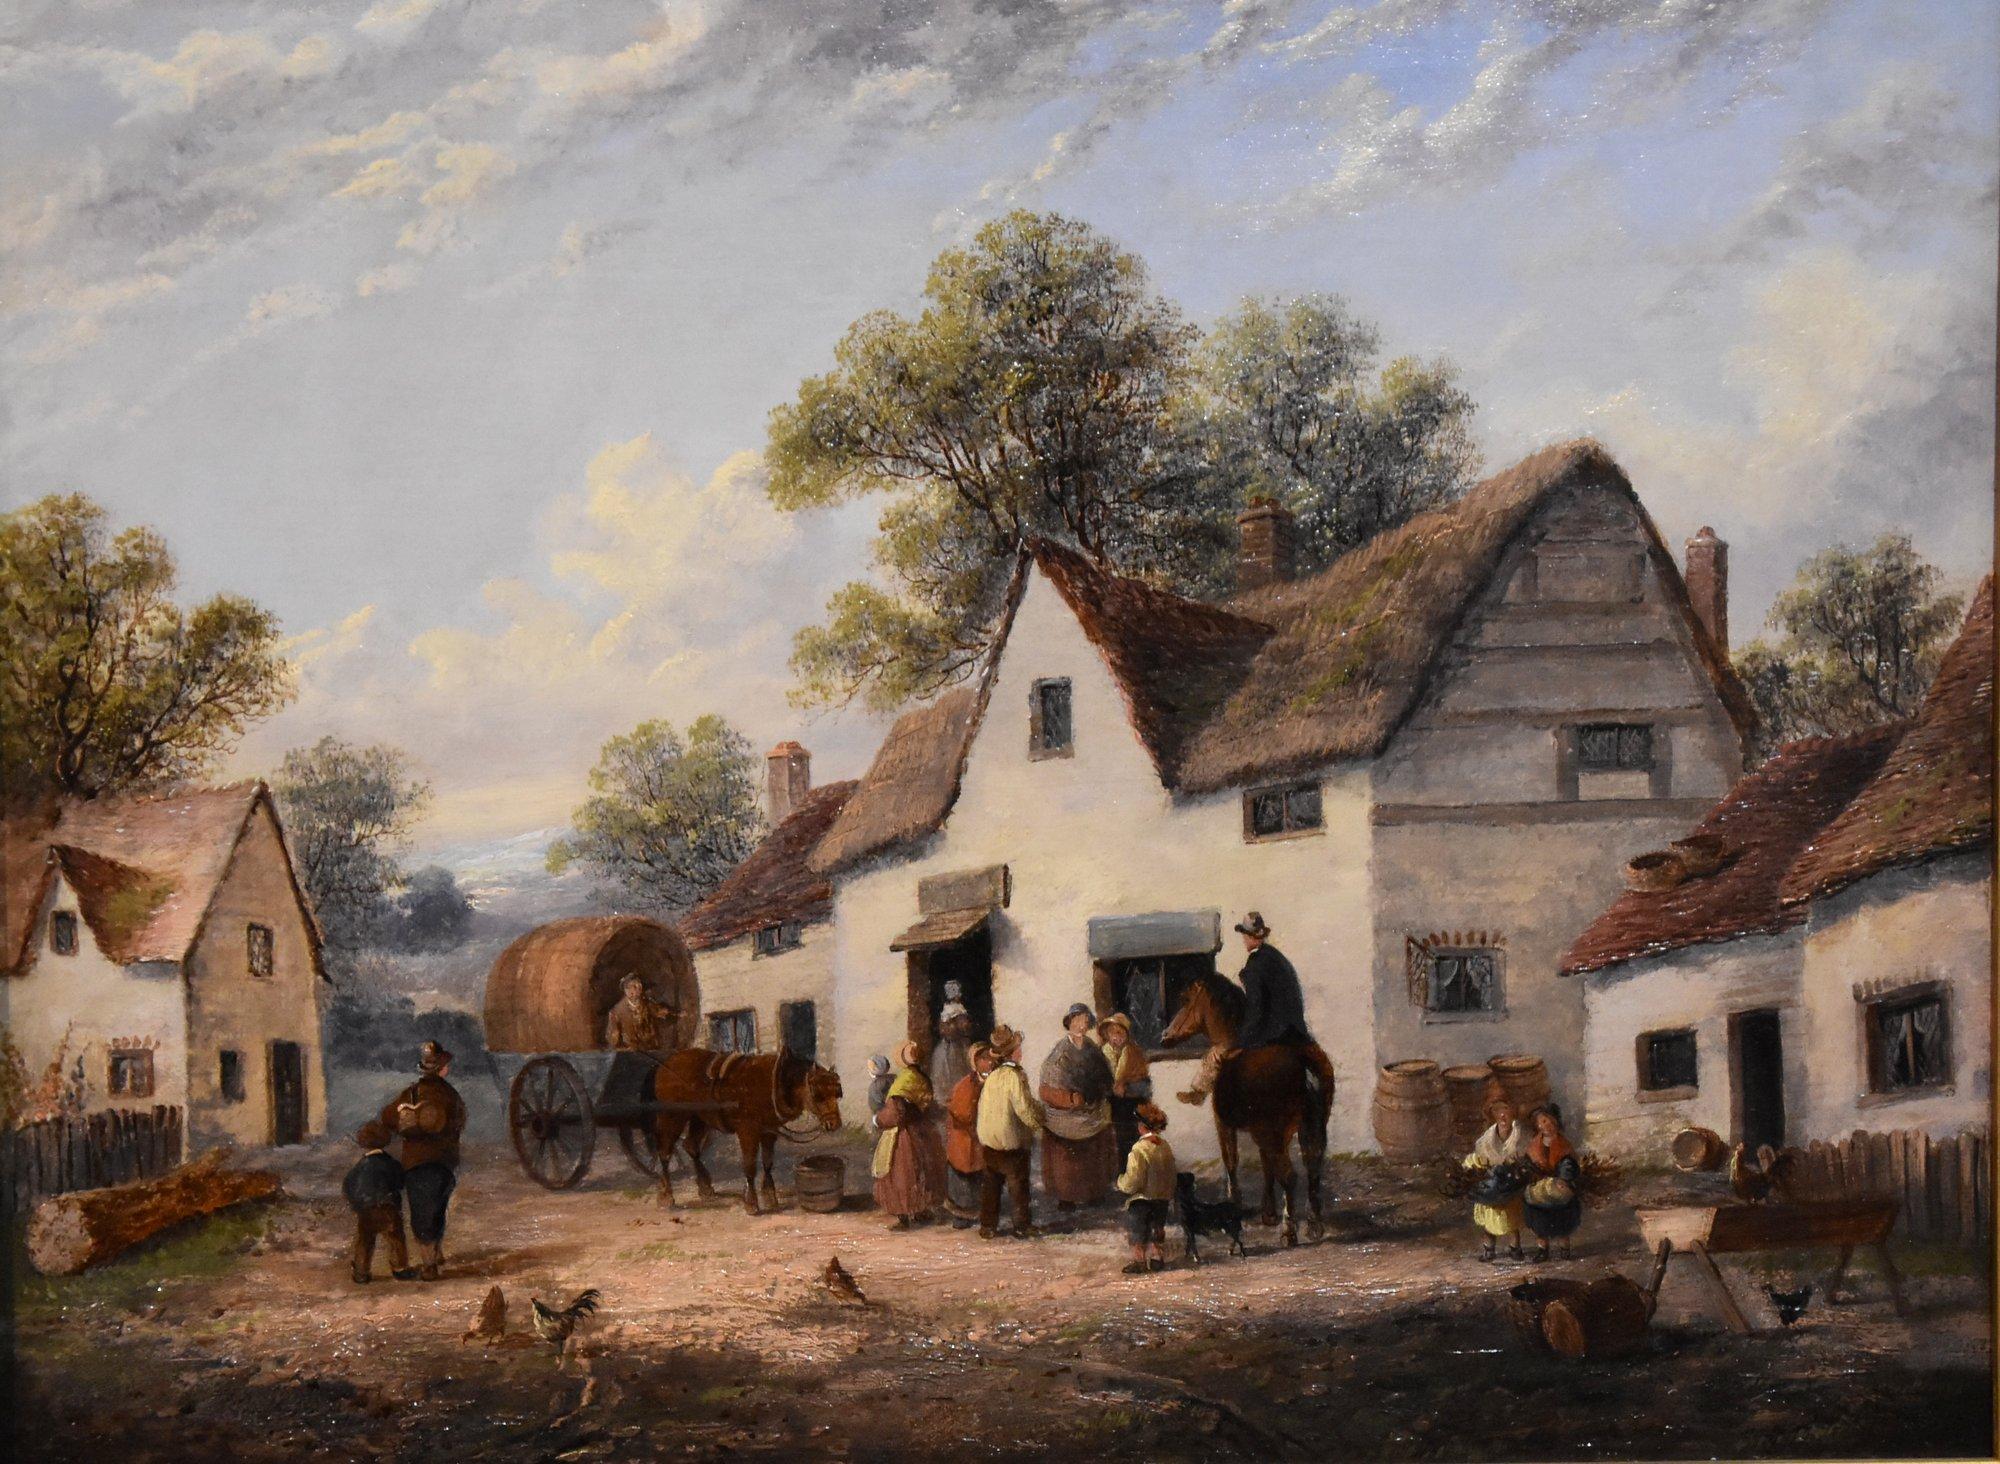 Oil Painting after William Lara 